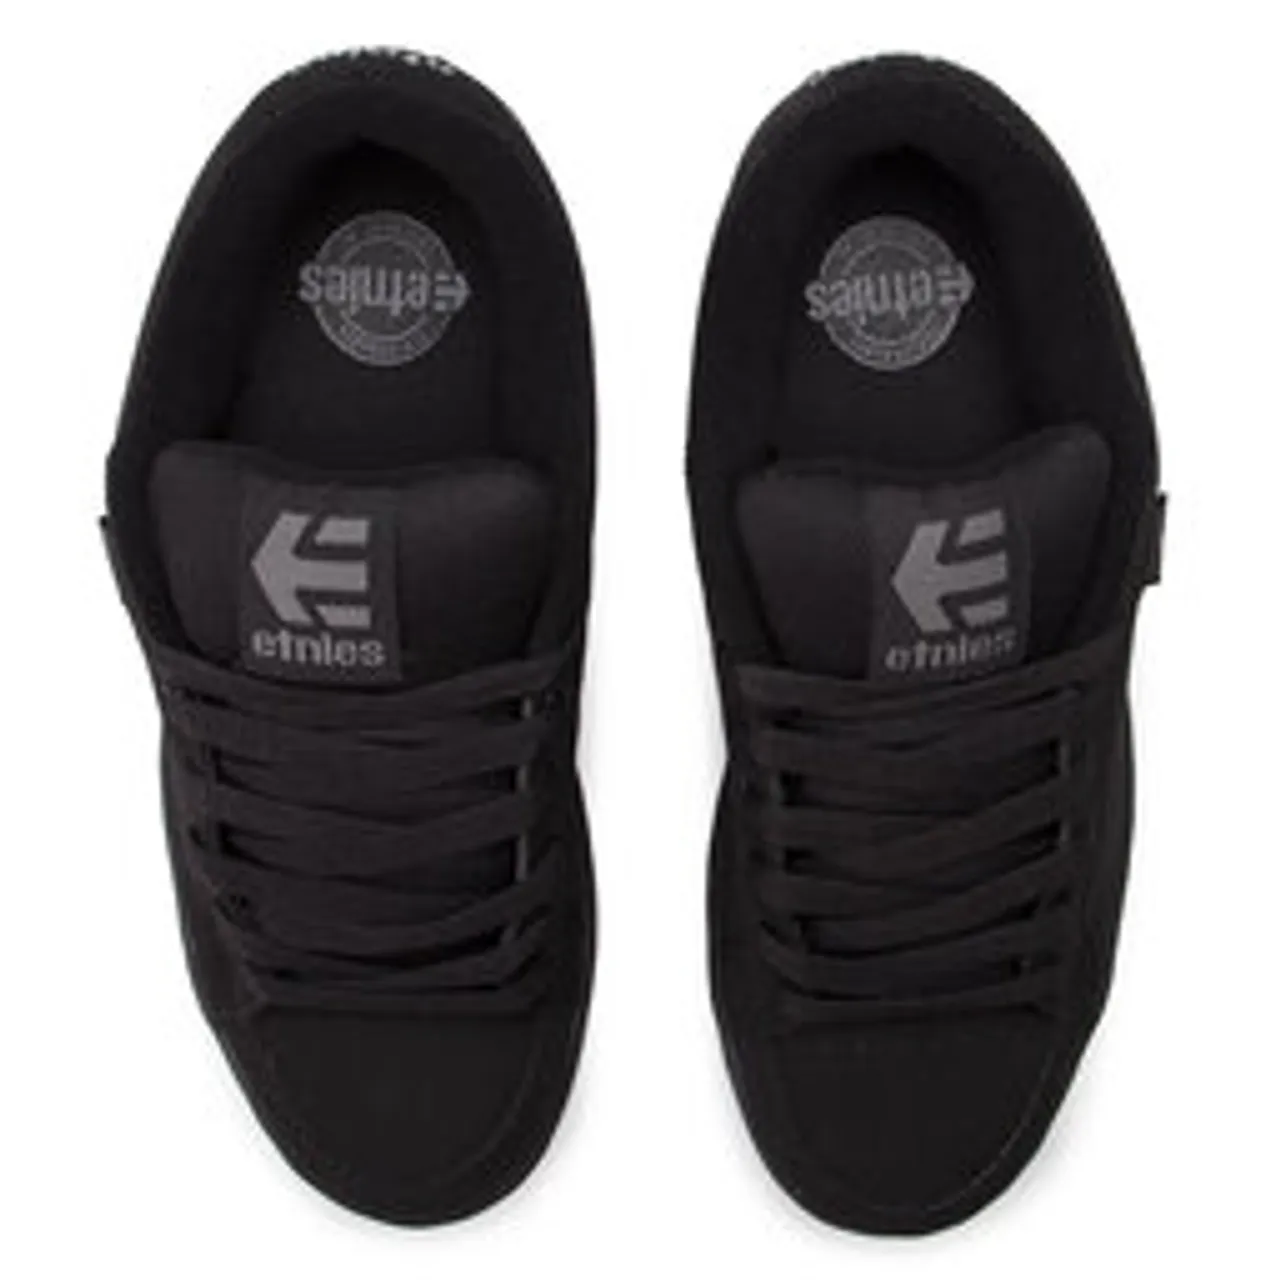 Sneakers Etnies Kingpin 4101000091 Black/Black 003